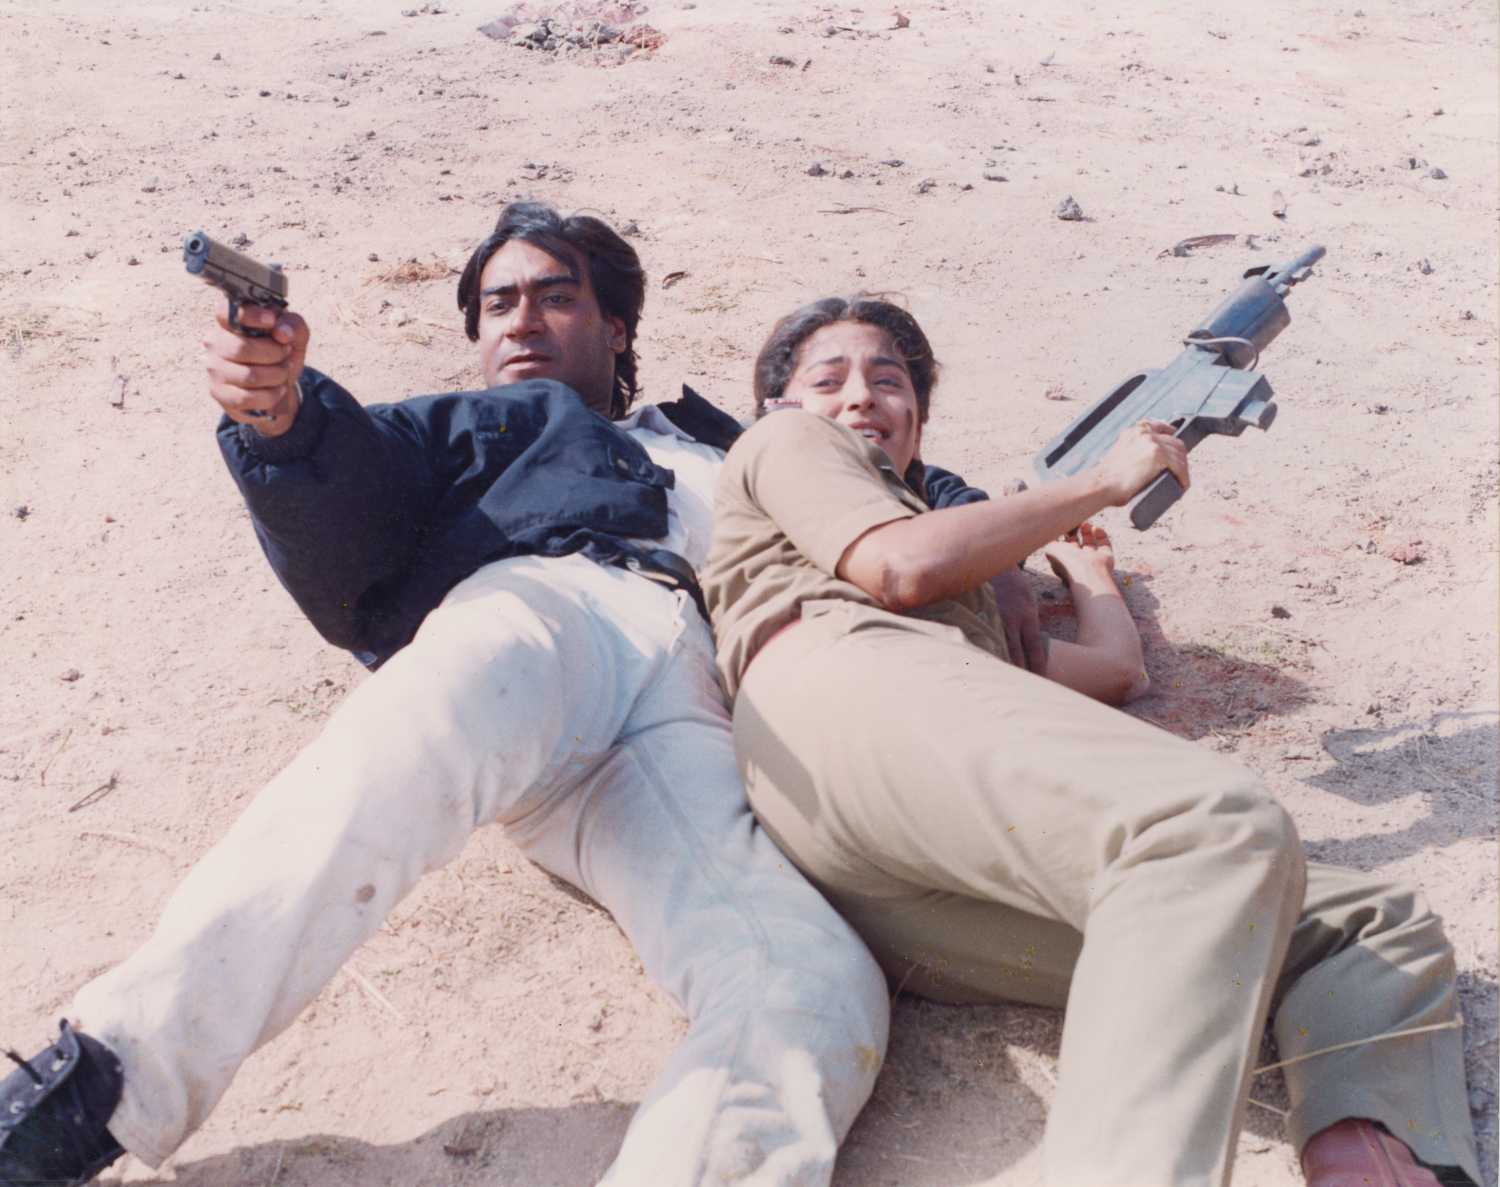 Naajayaz 1995 hindi movie download